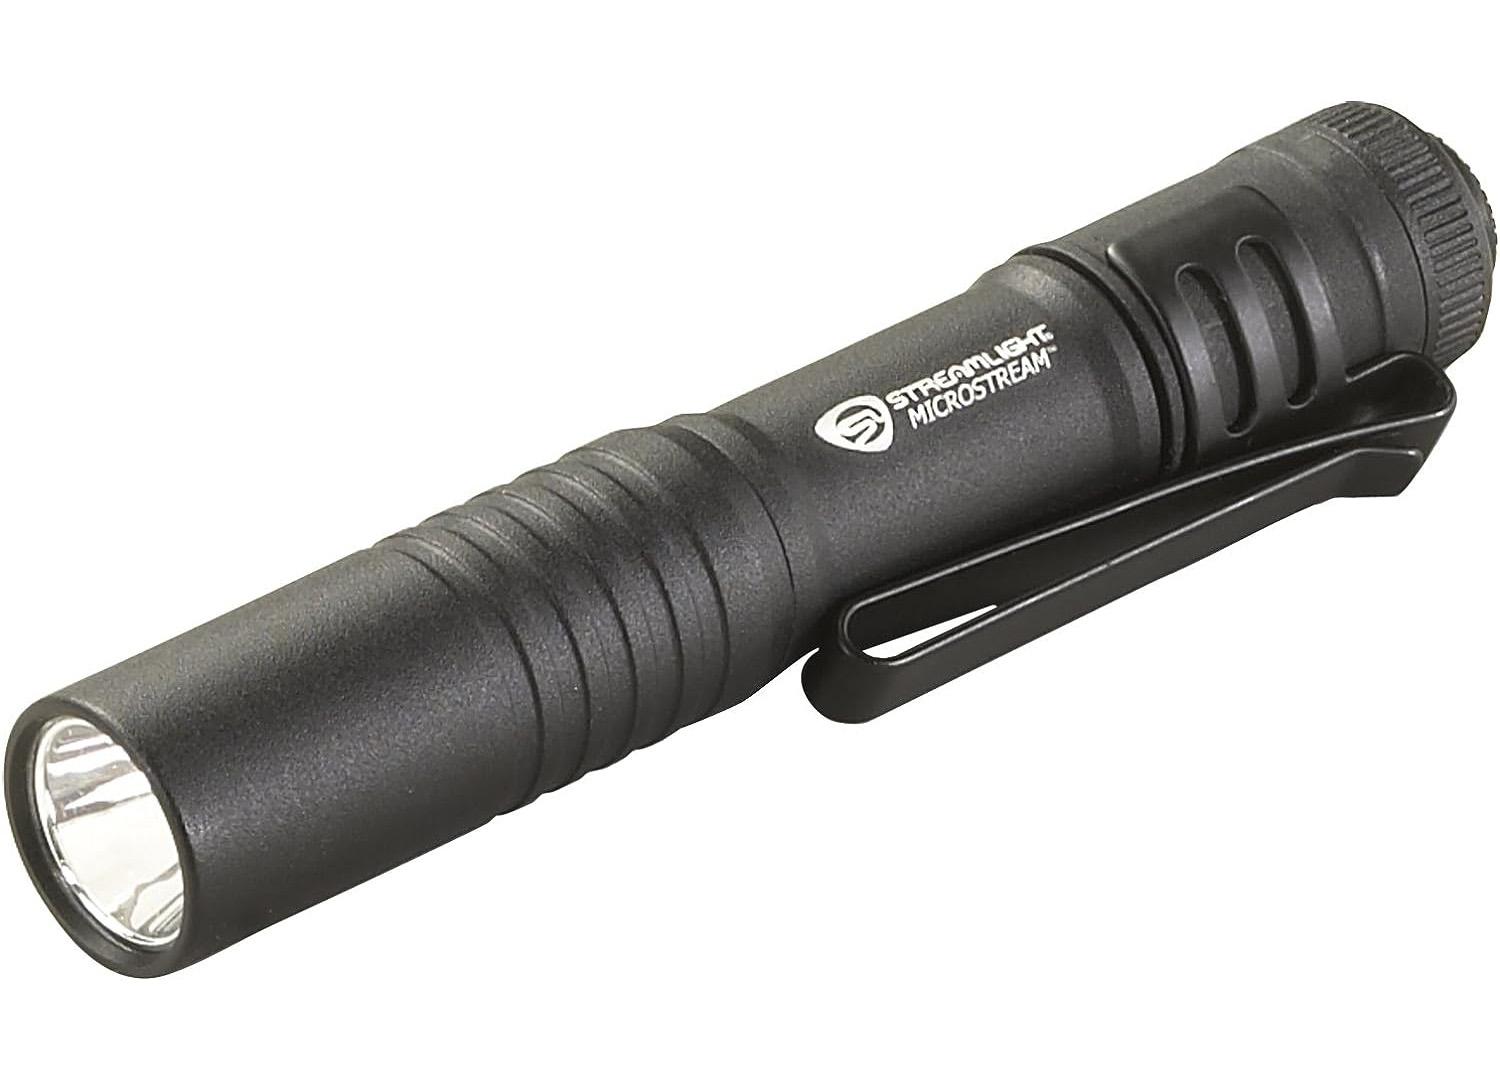 Streamlight 66318 MicroStream 45-Lumen Everyday Carry Pocket Flashlight for $12.54